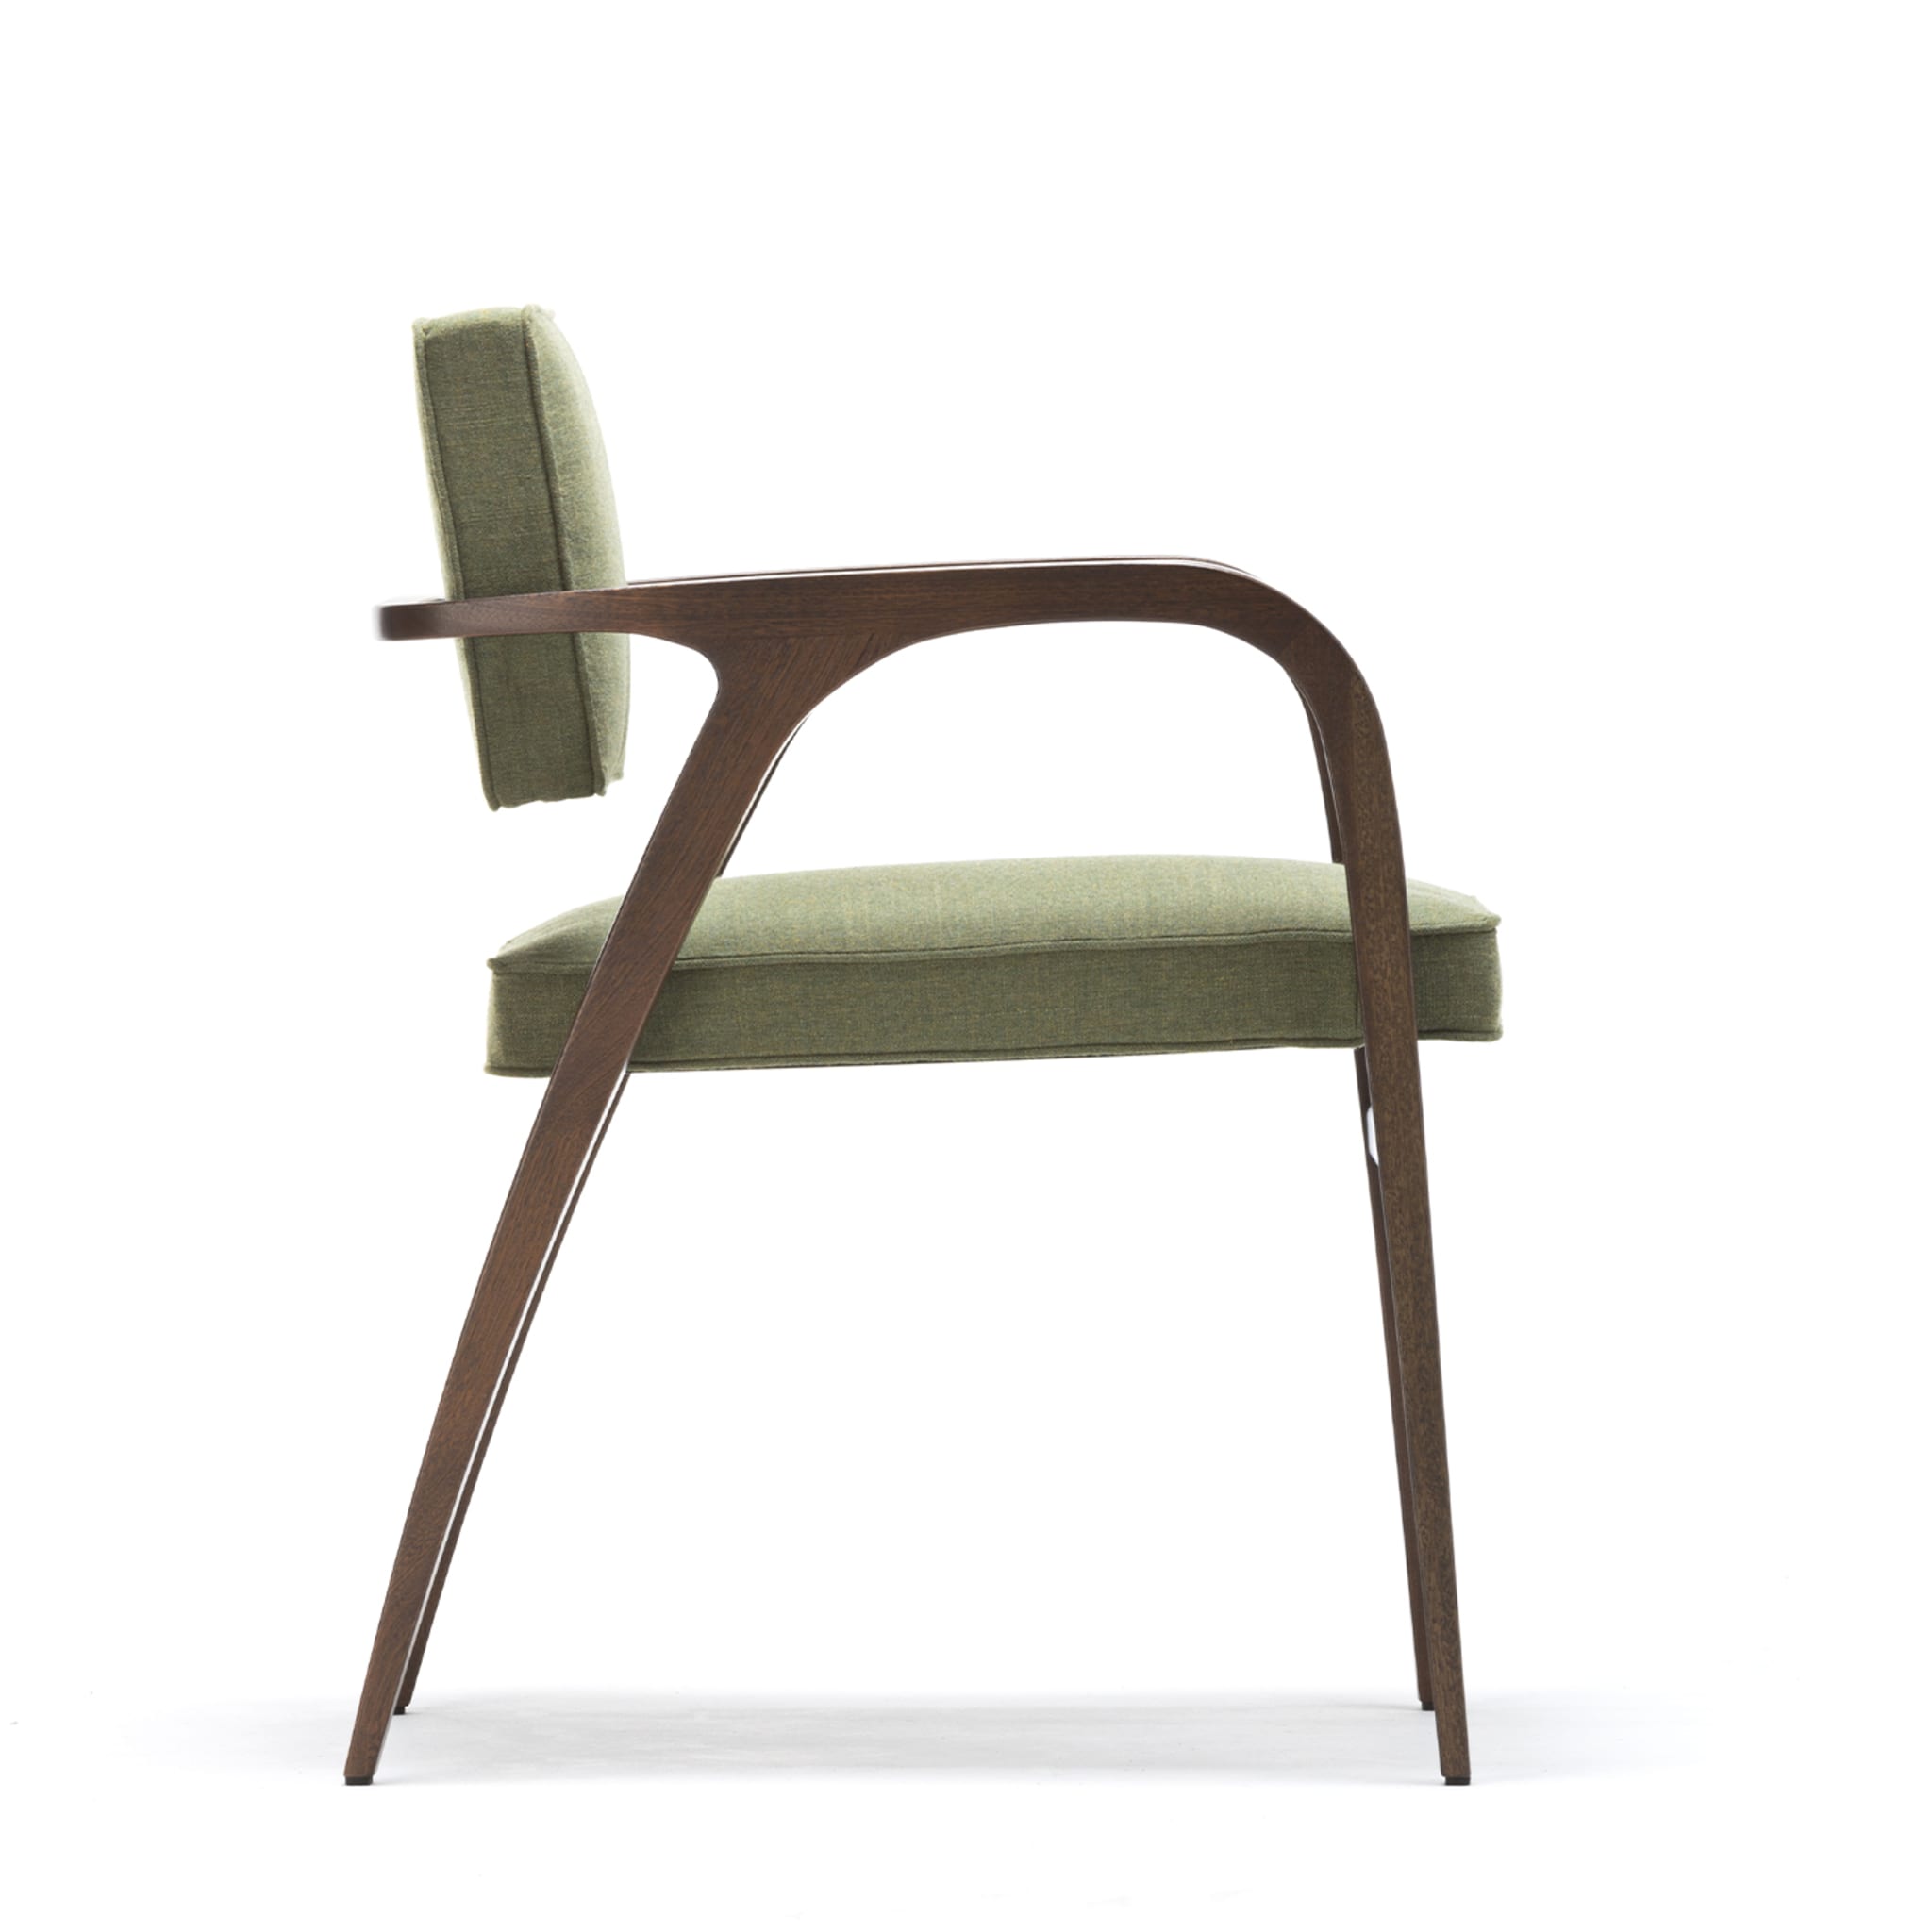 1938 Chair by Franco Albini - Alternative view 2